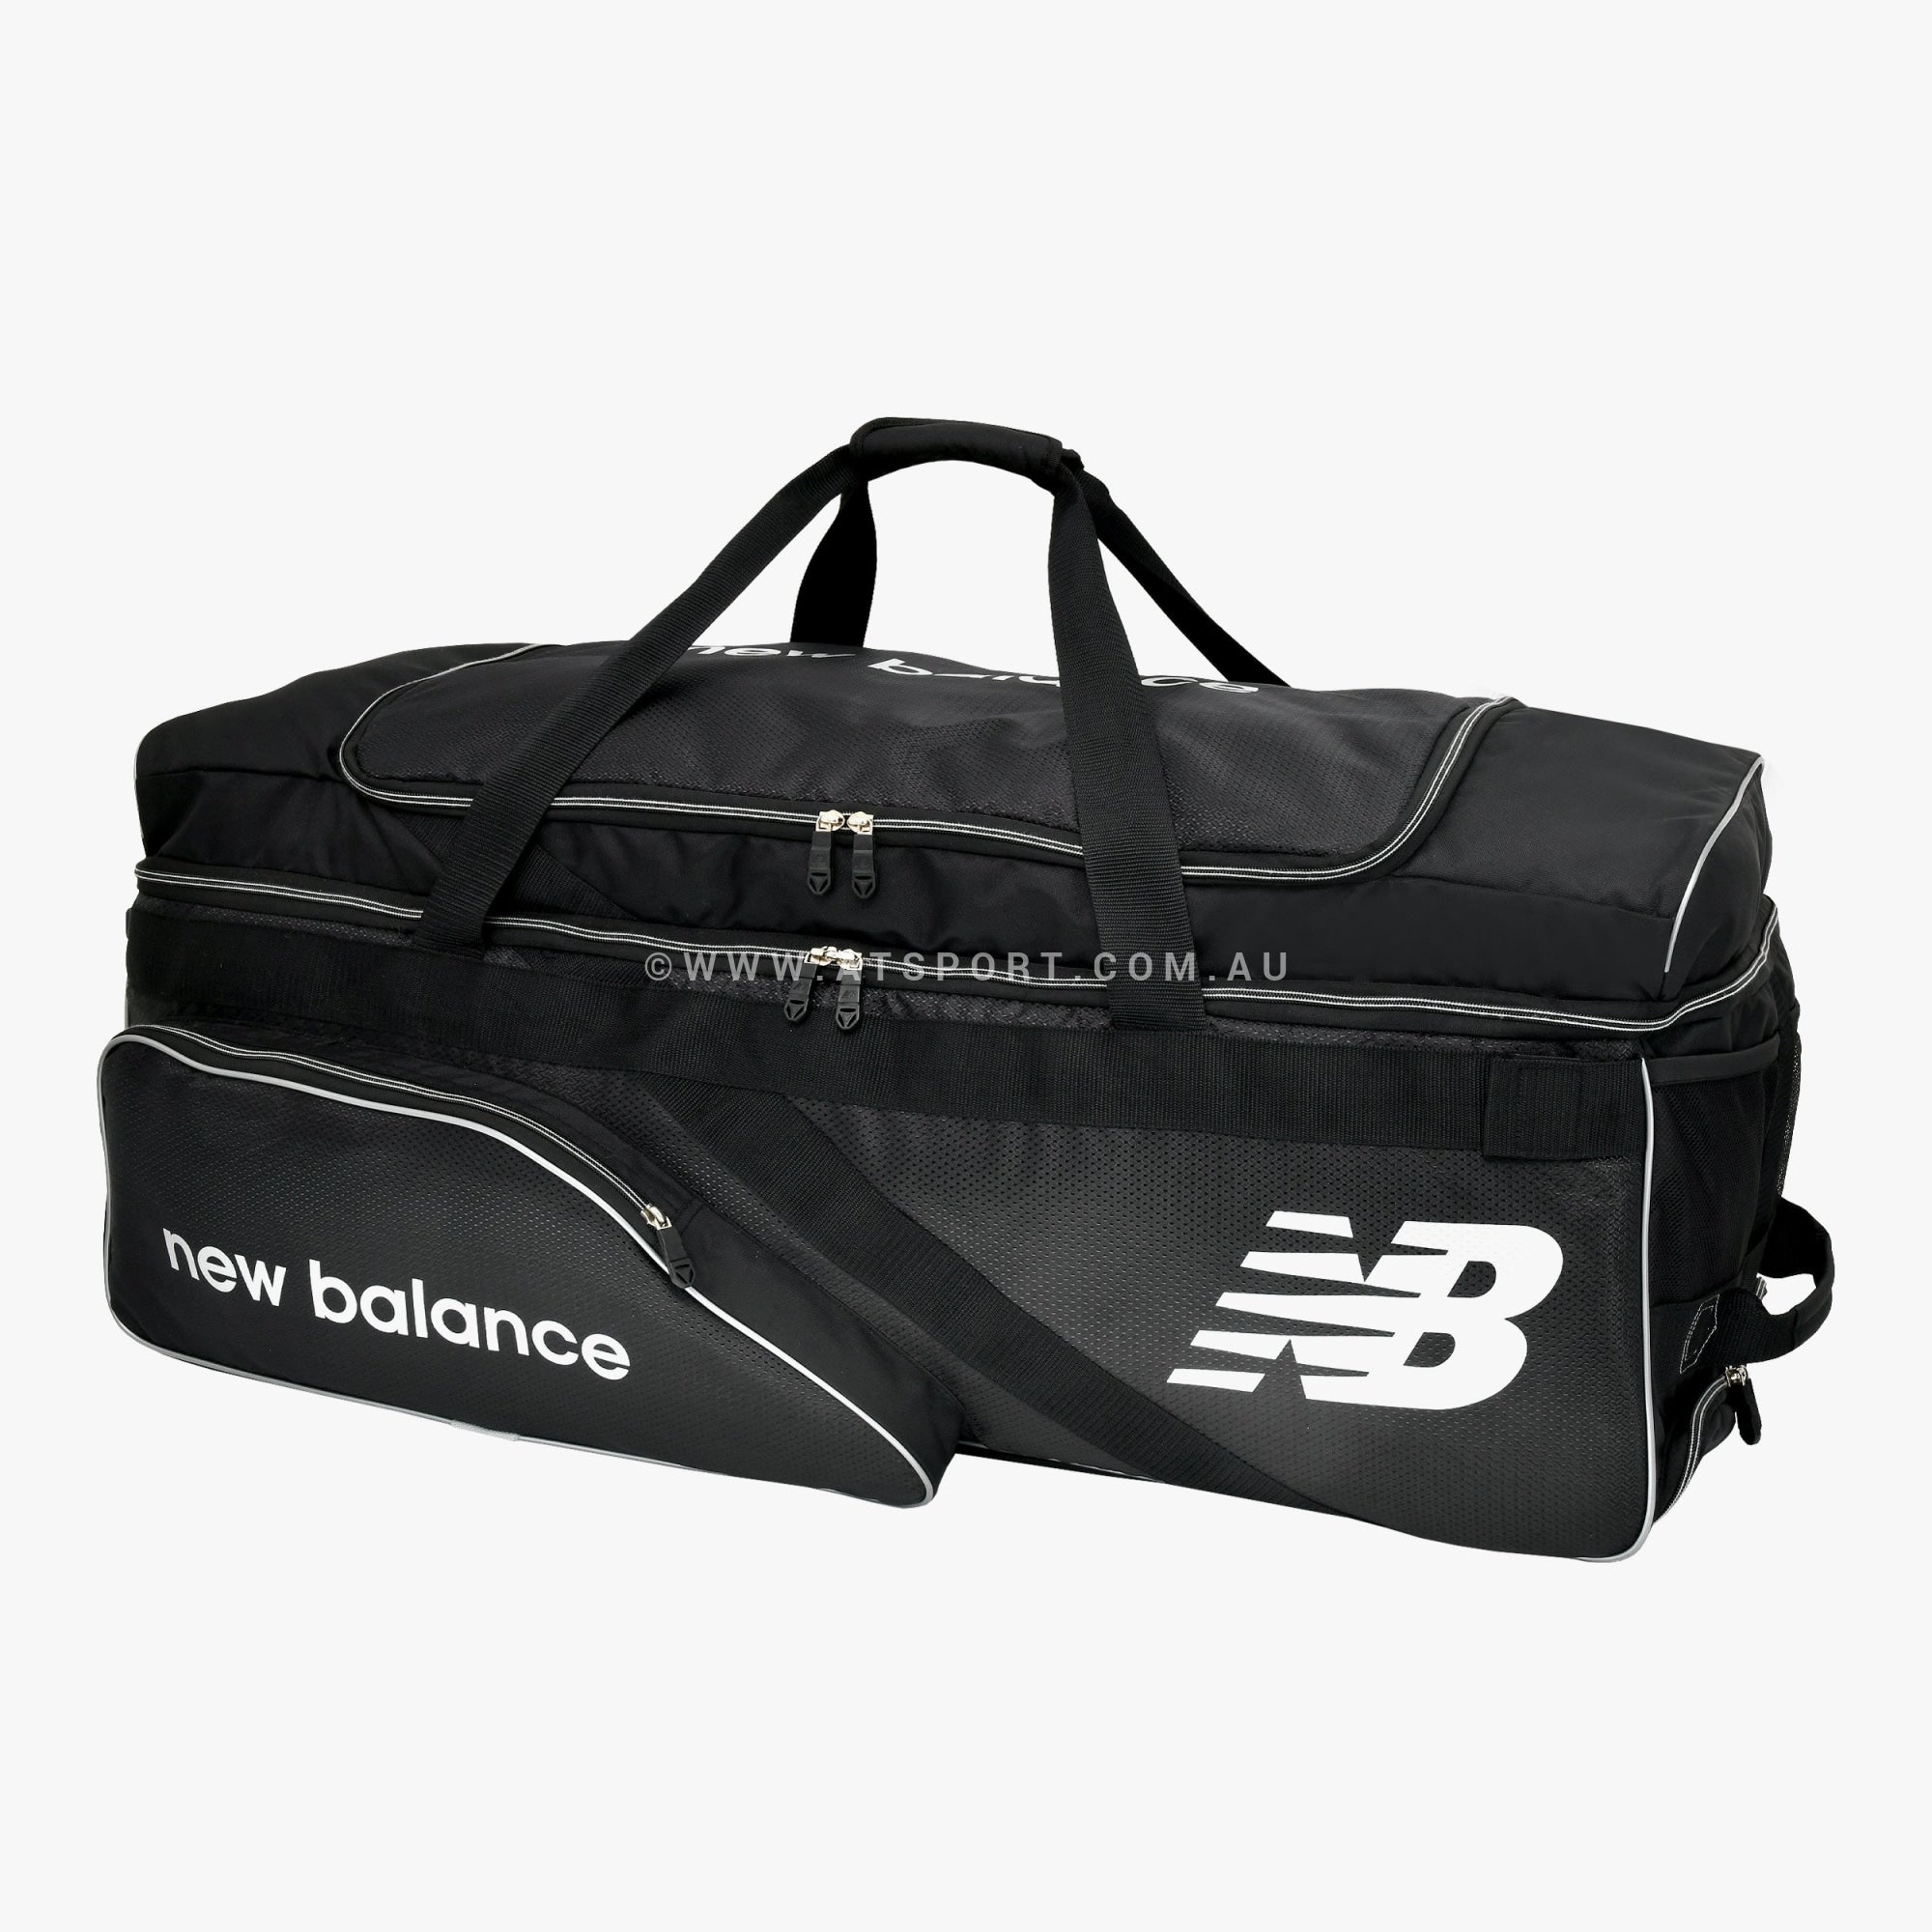 New Balance 800 Wheelie Cricket Kit Bag